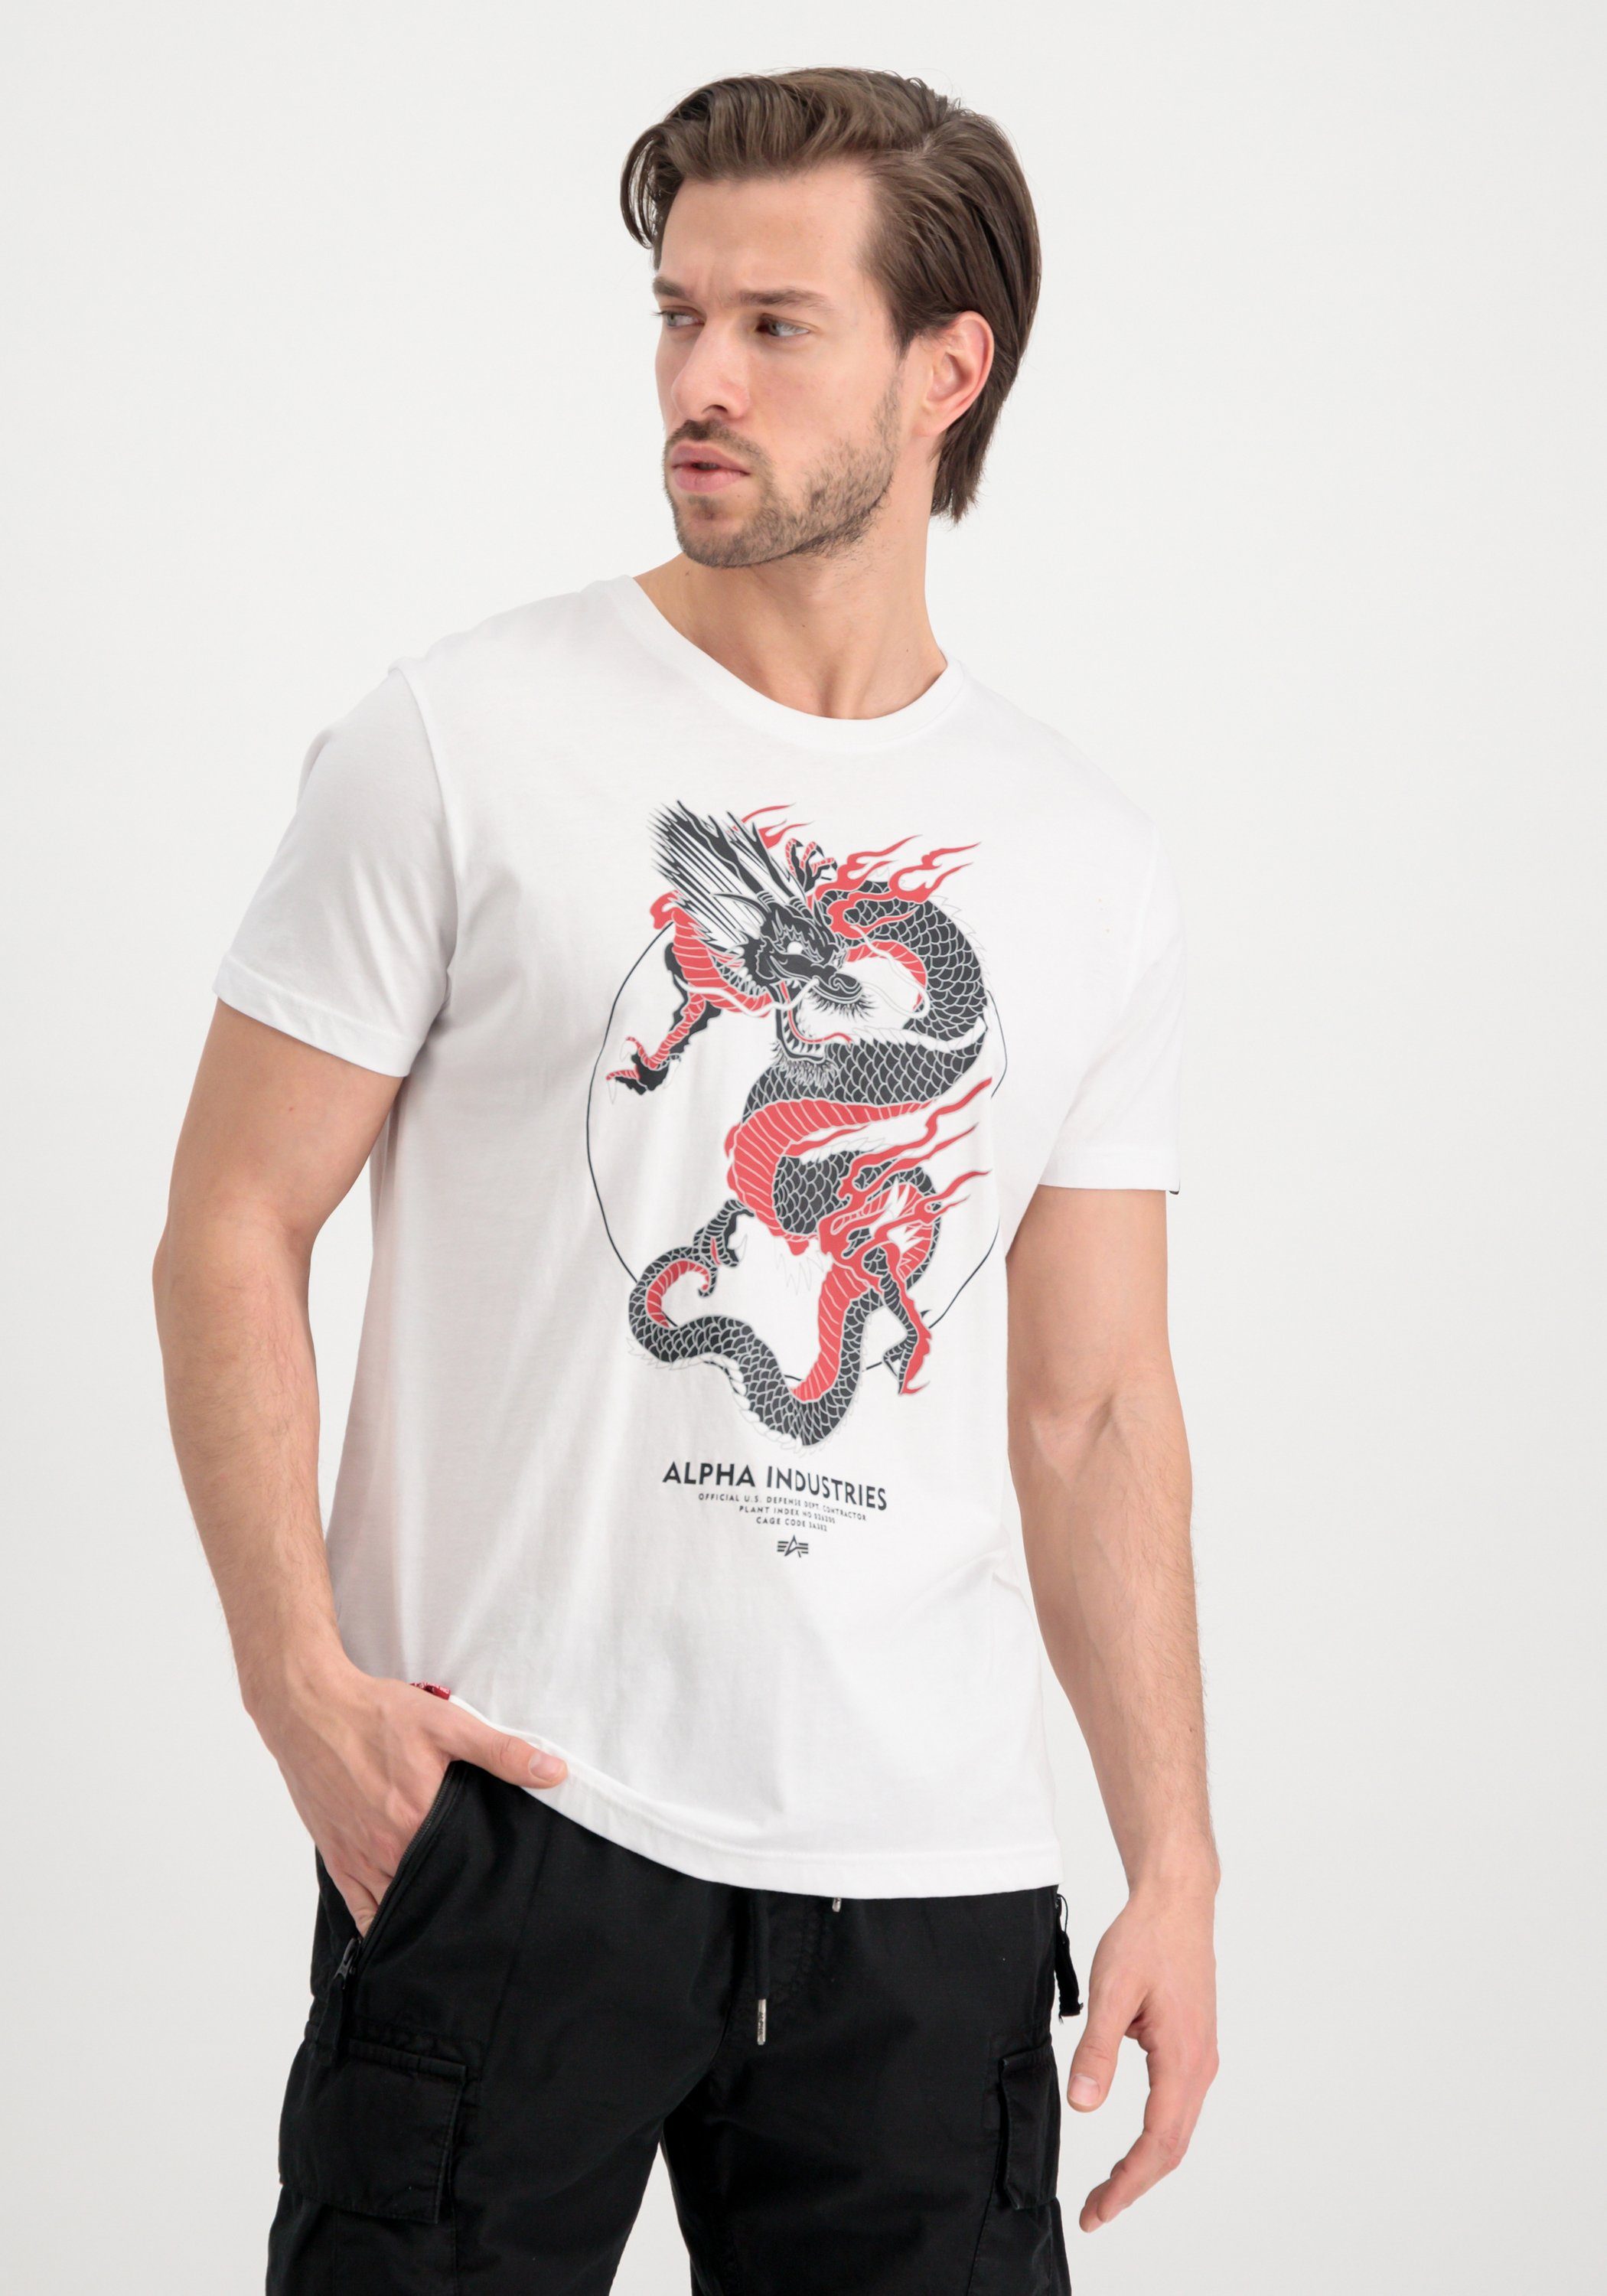 Industries de | Industries T shop T-Shirts online Alpha - OTTO T-shirt Alpha Dragon in Heritage Men